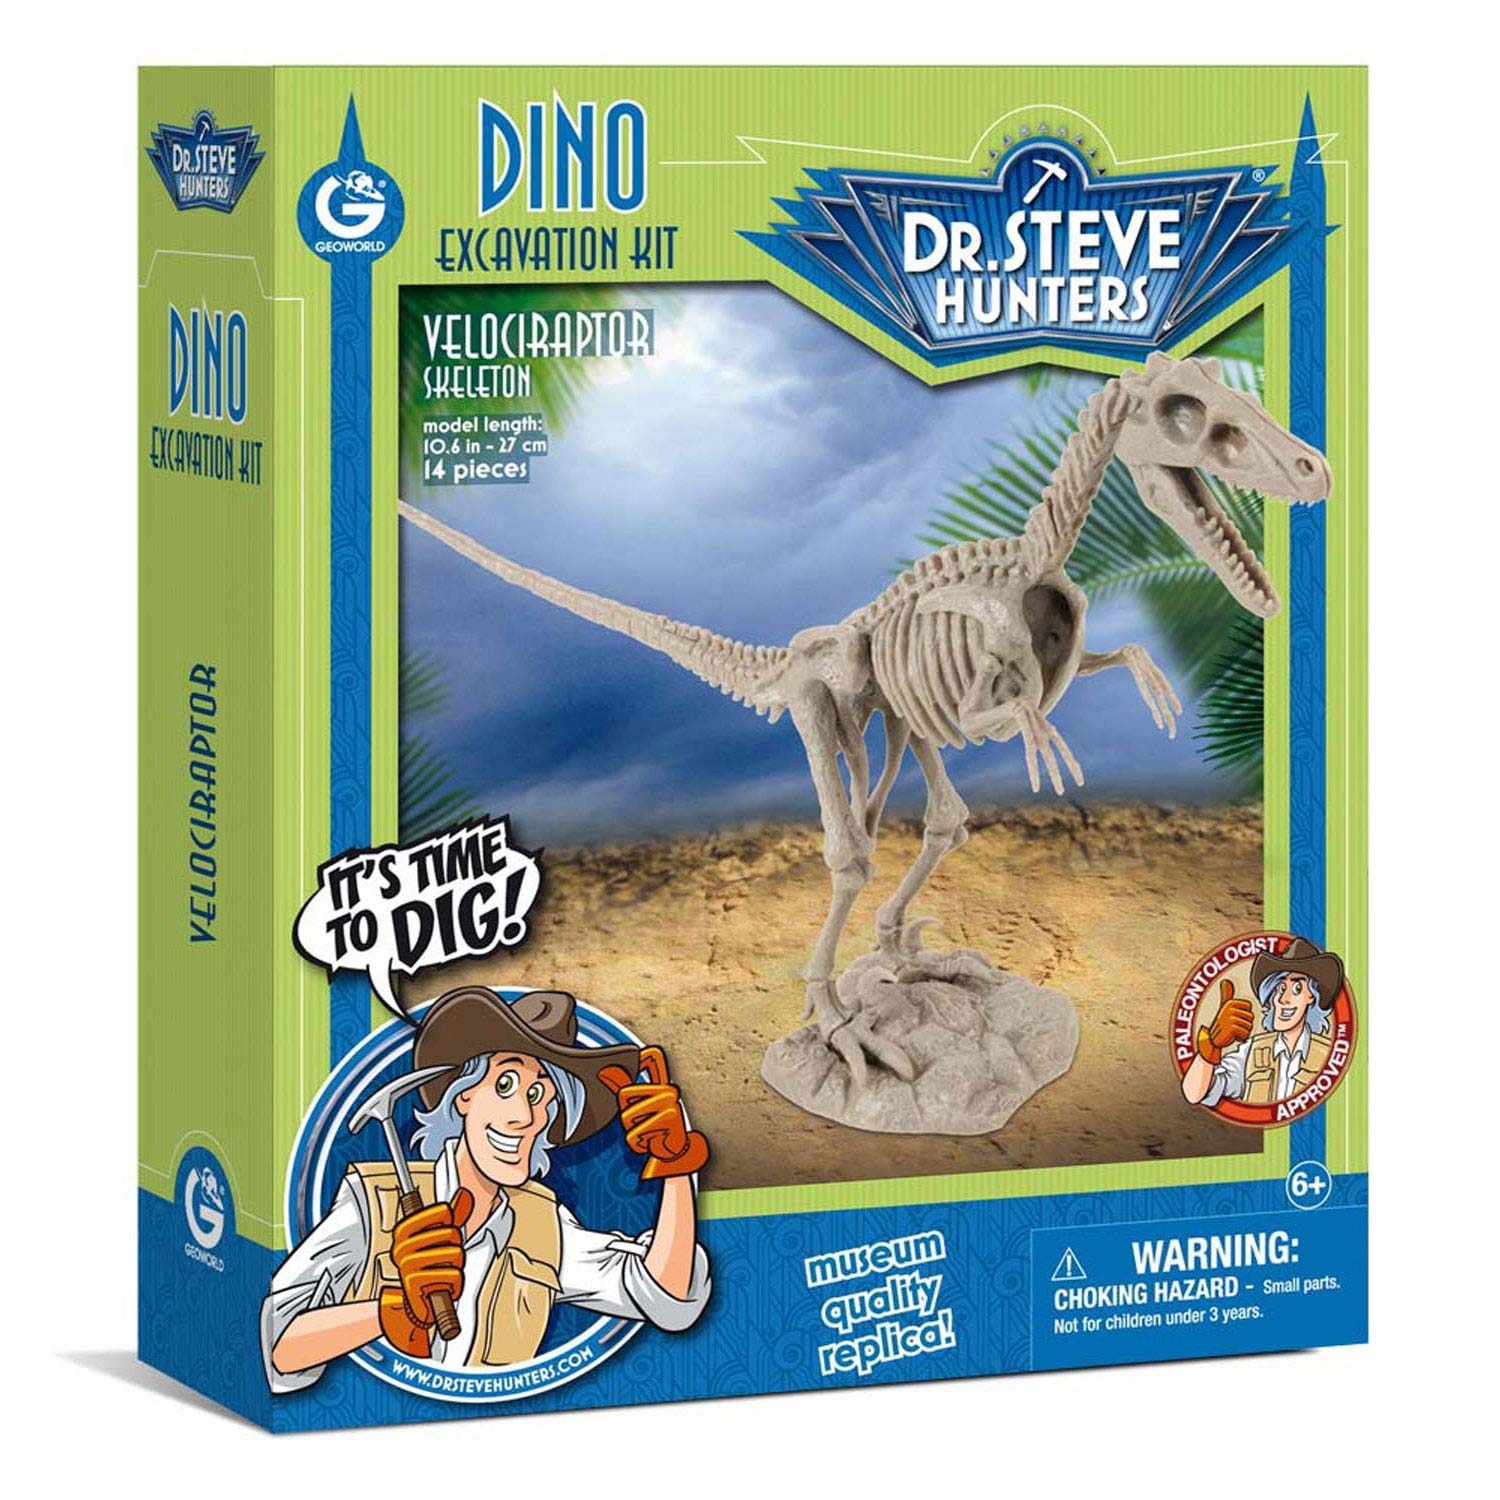 Geoworld Dino Uitgraaf Kit - Velociraptor Skelet